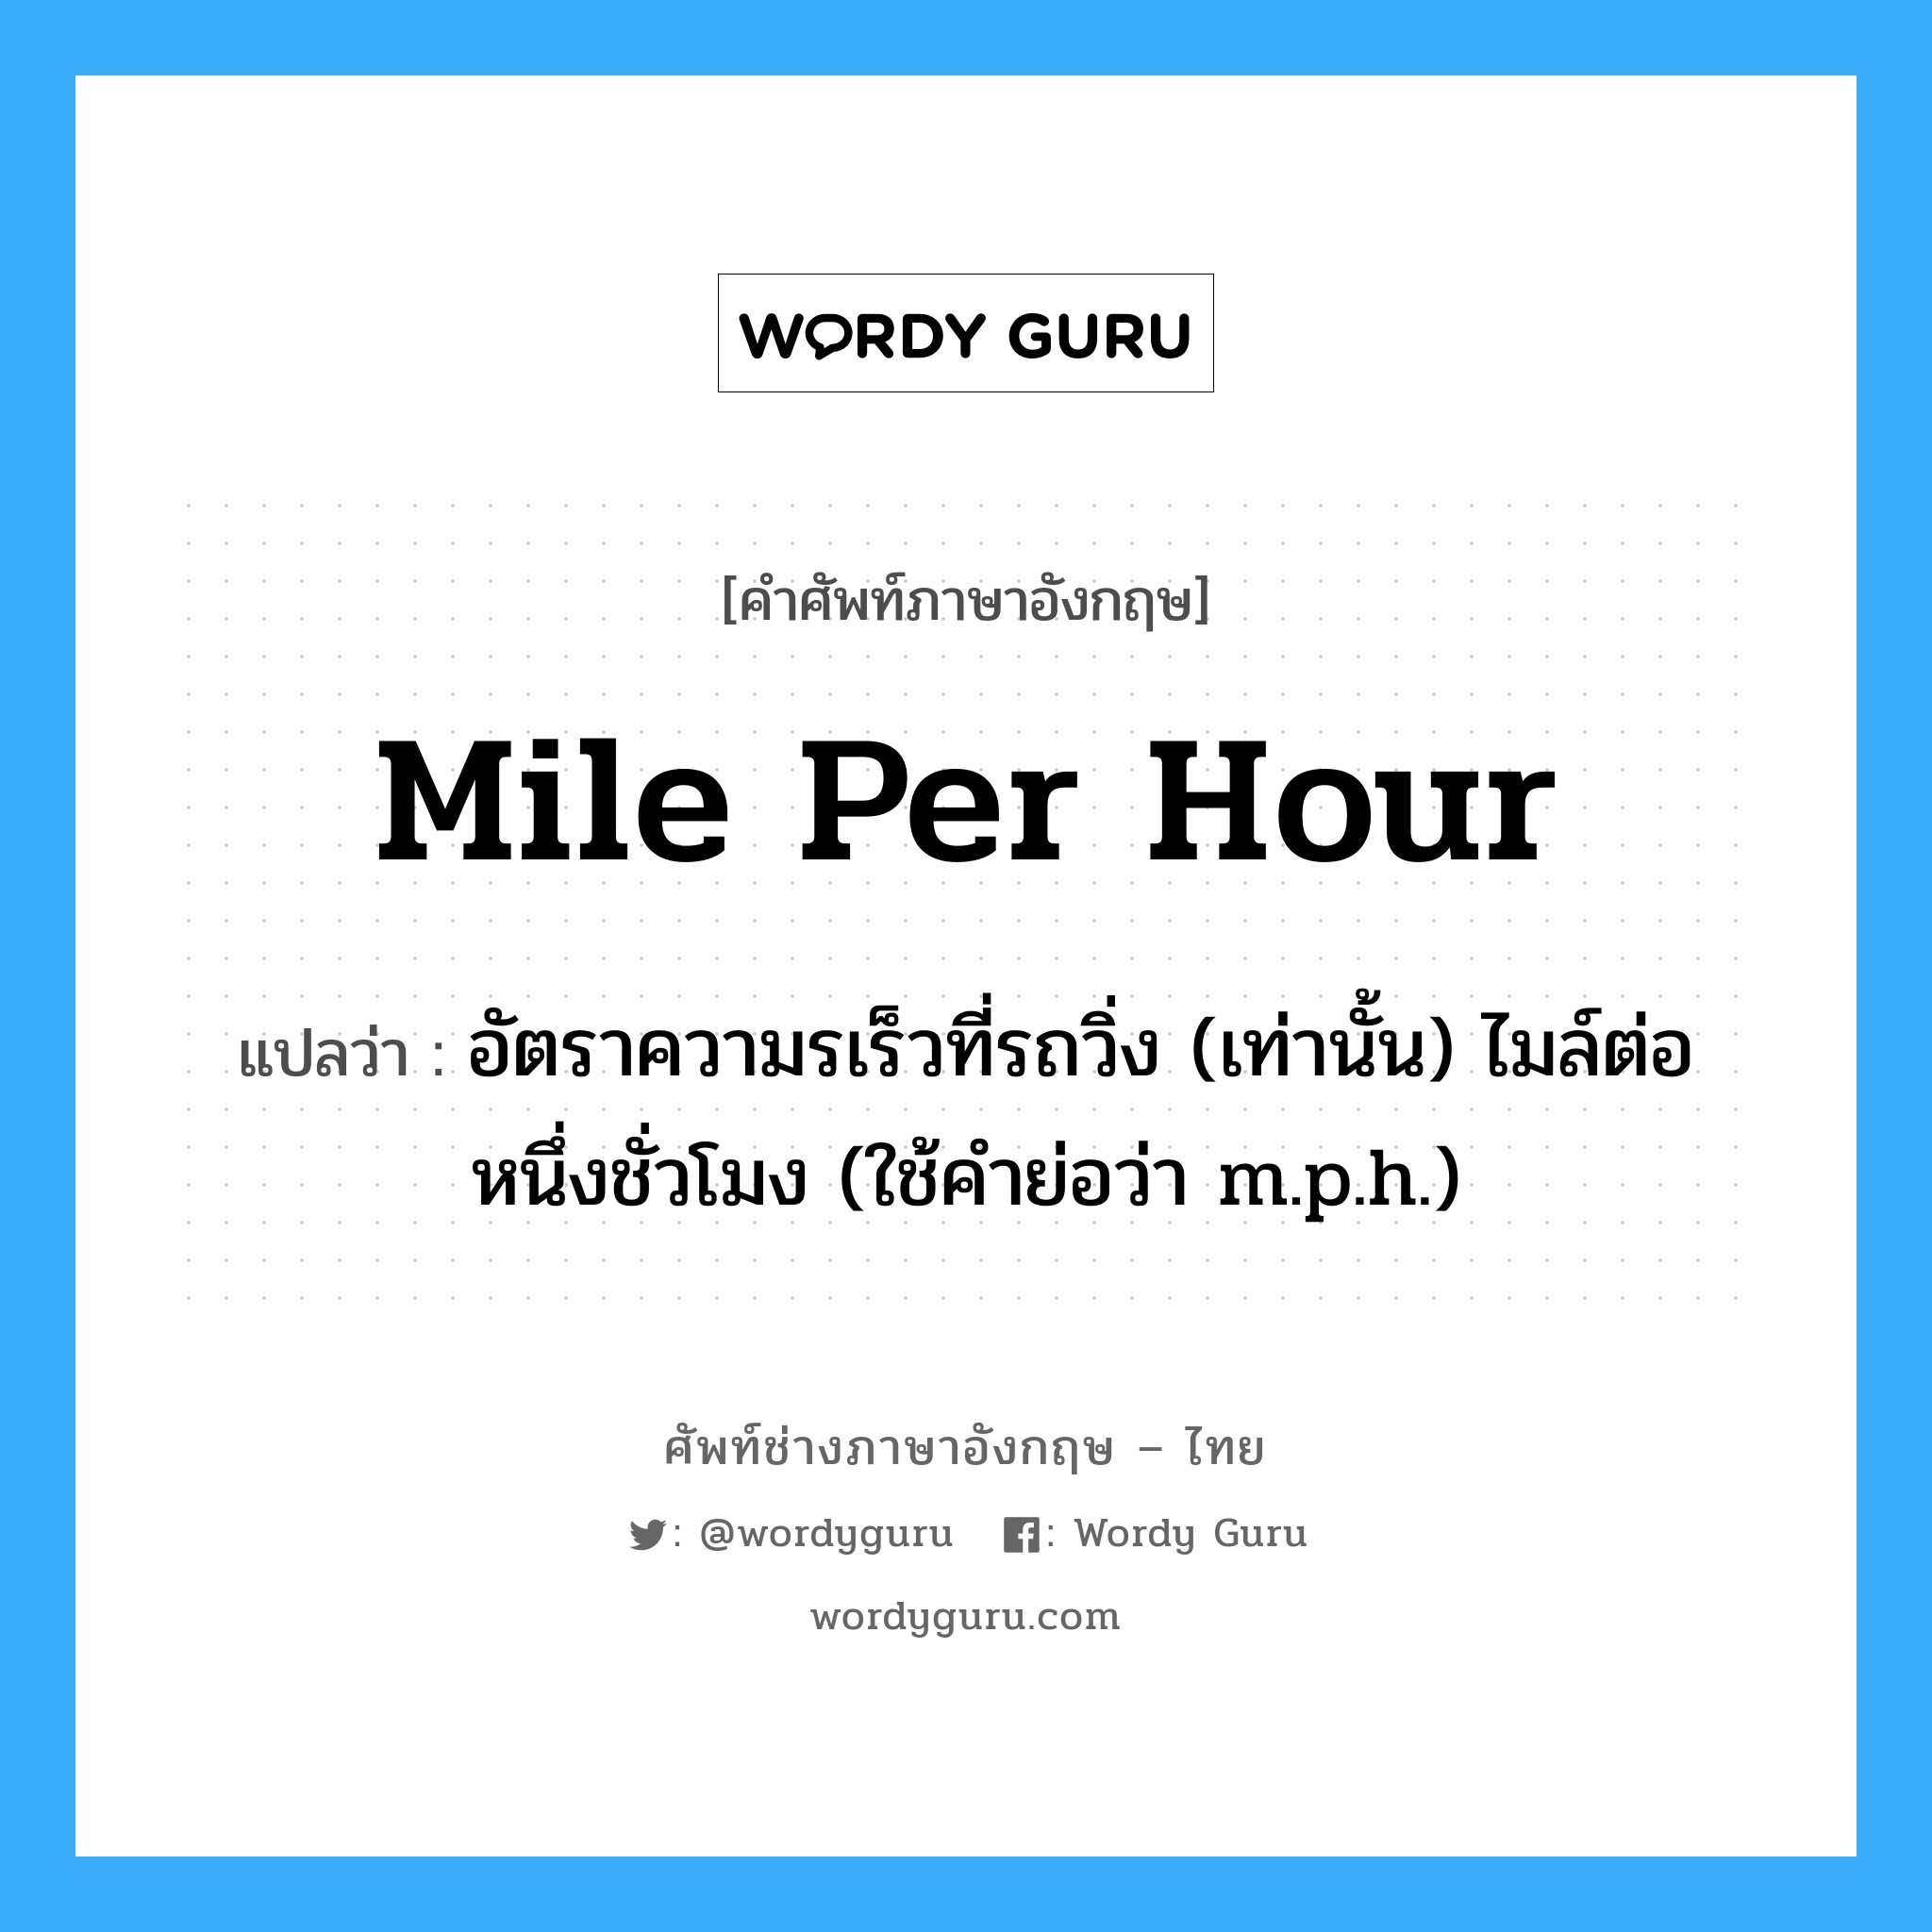 mile per hour แปลว่า?, คำศัพท์ช่างภาษาอังกฤษ - ไทย mile per hour คำศัพท์ภาษาอังกฤษ mile per hour แปลว่า อัตราความรเร็วที่รถวิ่ง (เท่านั้น) ไมล์ต่อหนึ่งชั่วโมง (ใช้คำย่อว่า m.p.h.)